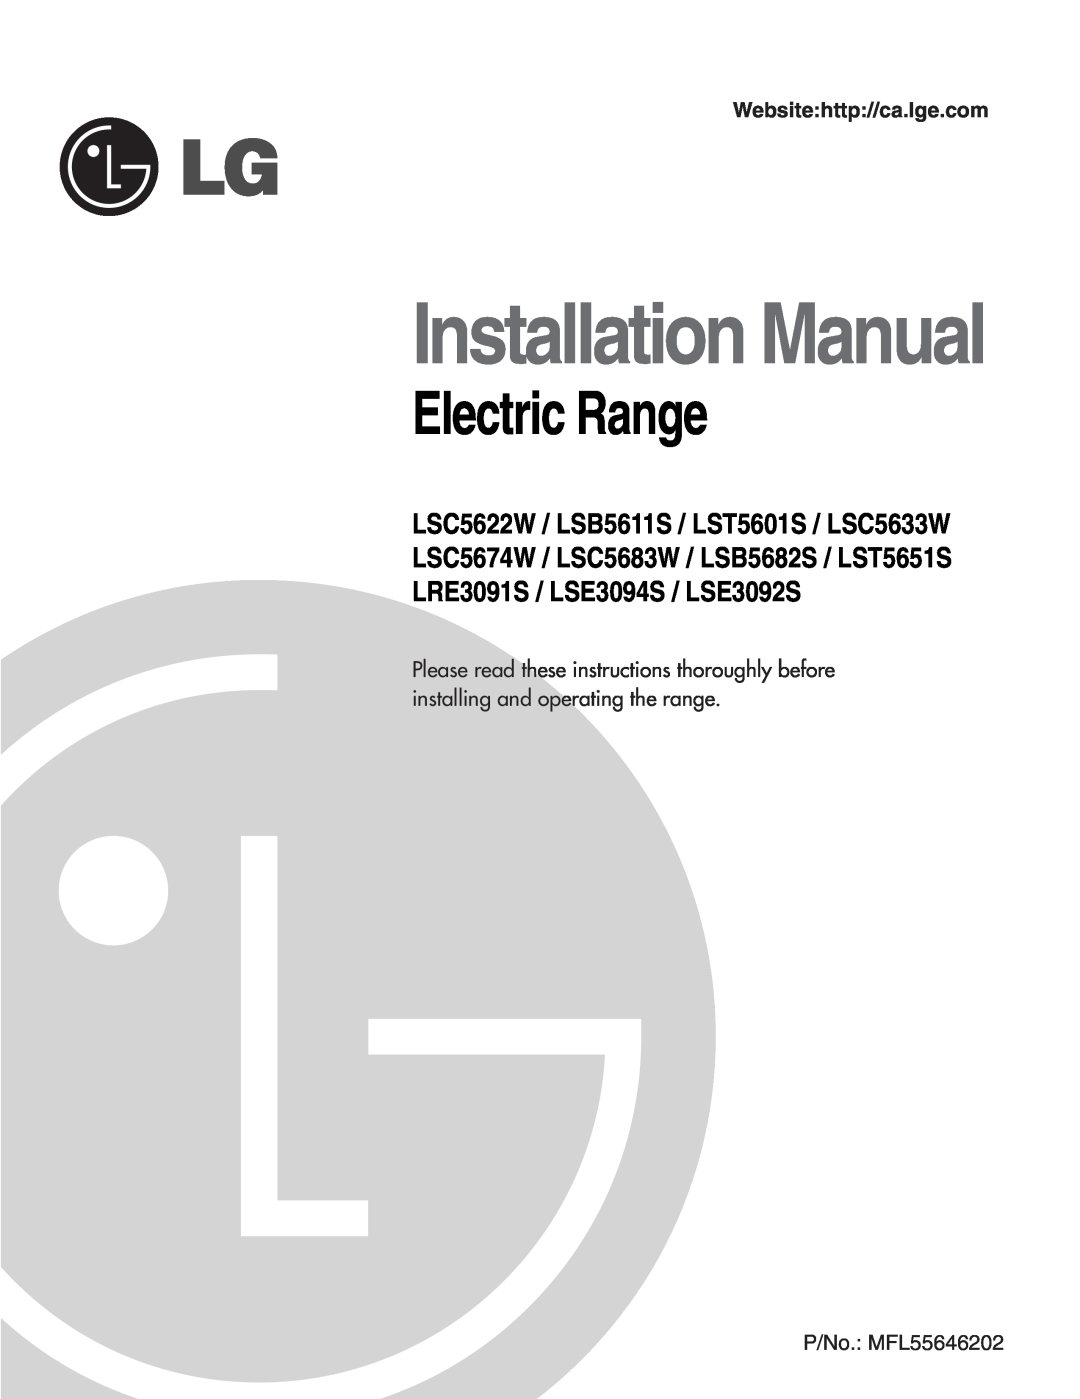 LG Electronics LST5601S, LRE3091S installation manual Installation Manual, Electric Range, Websitehttp//ca.lge.com 